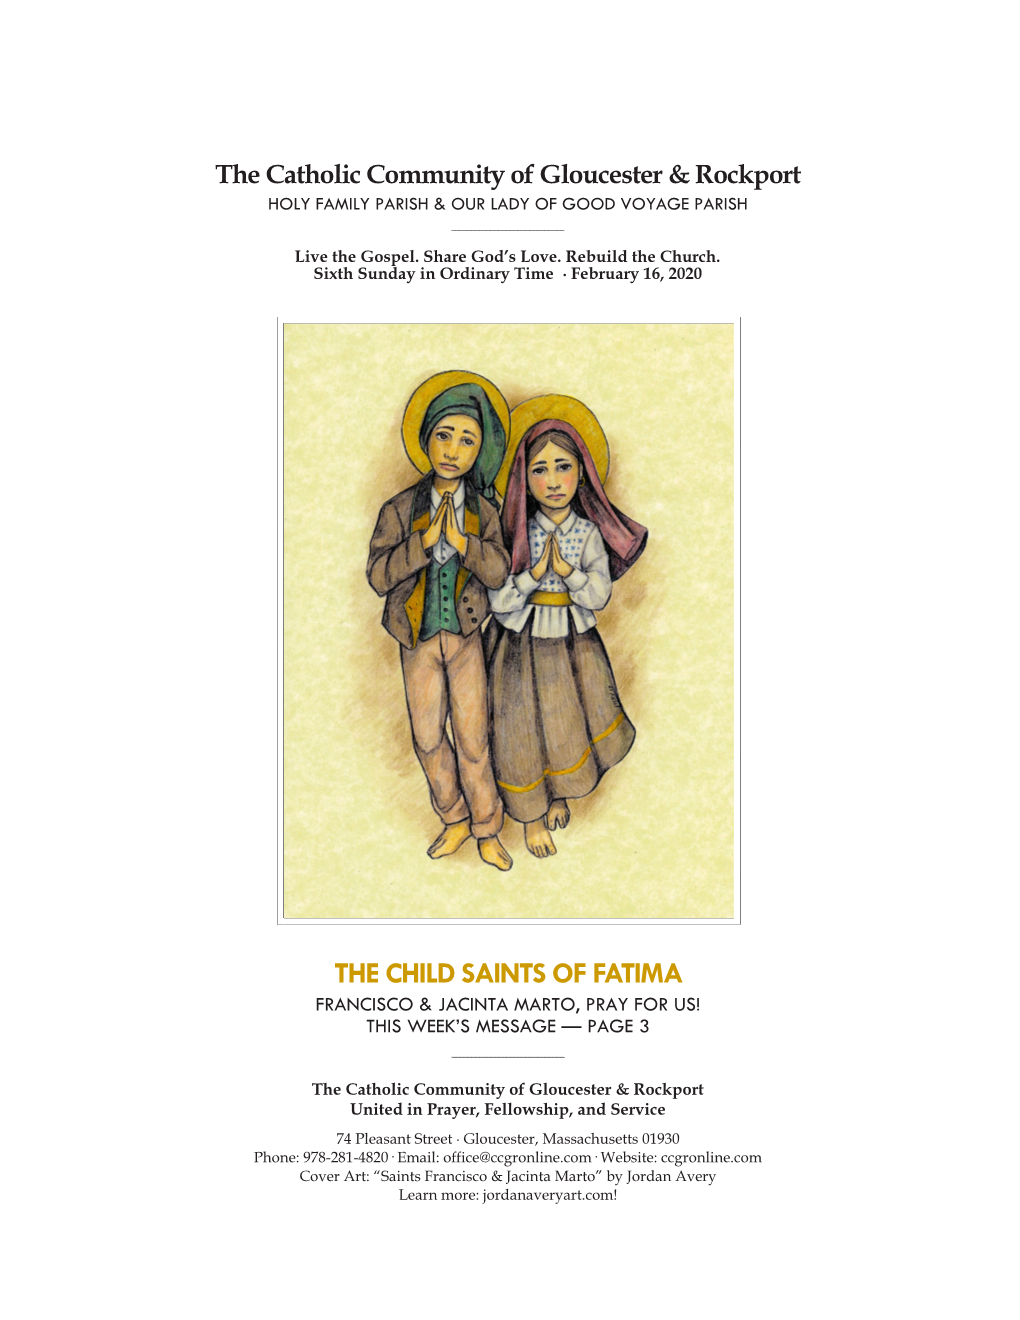 The Child Saints of Fatima